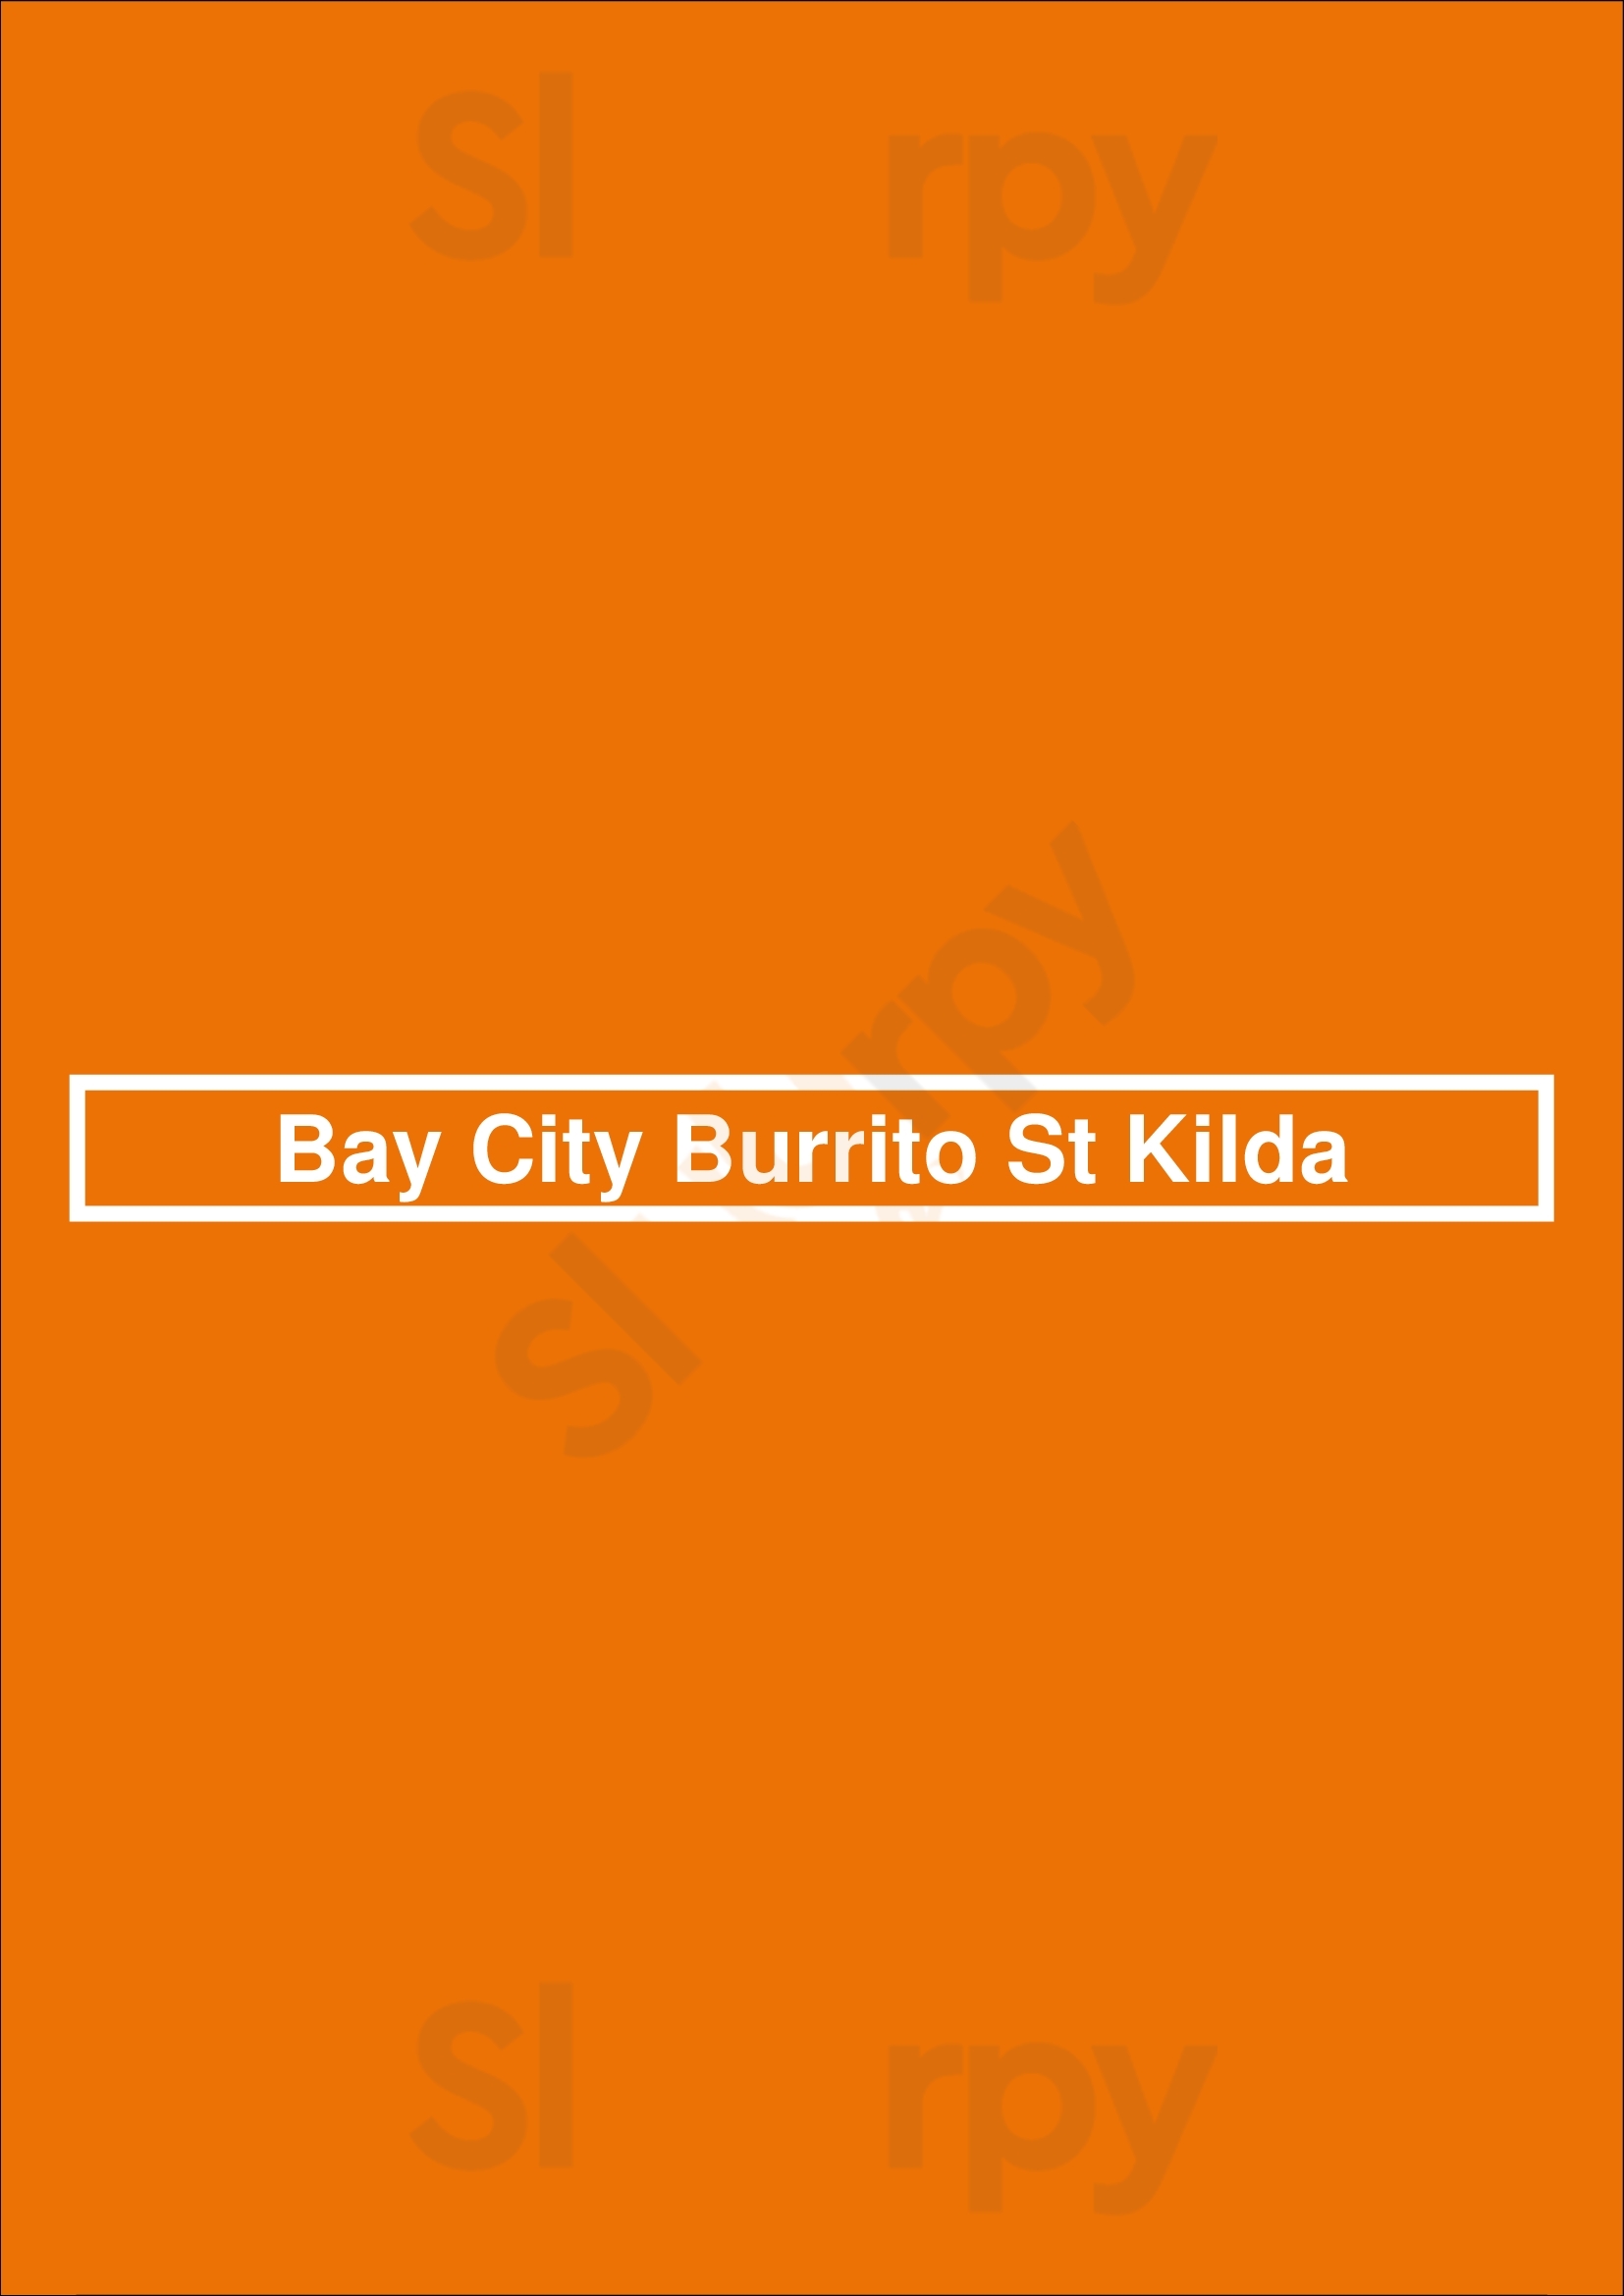 Bay City Burrito St Kilda Menu - 1